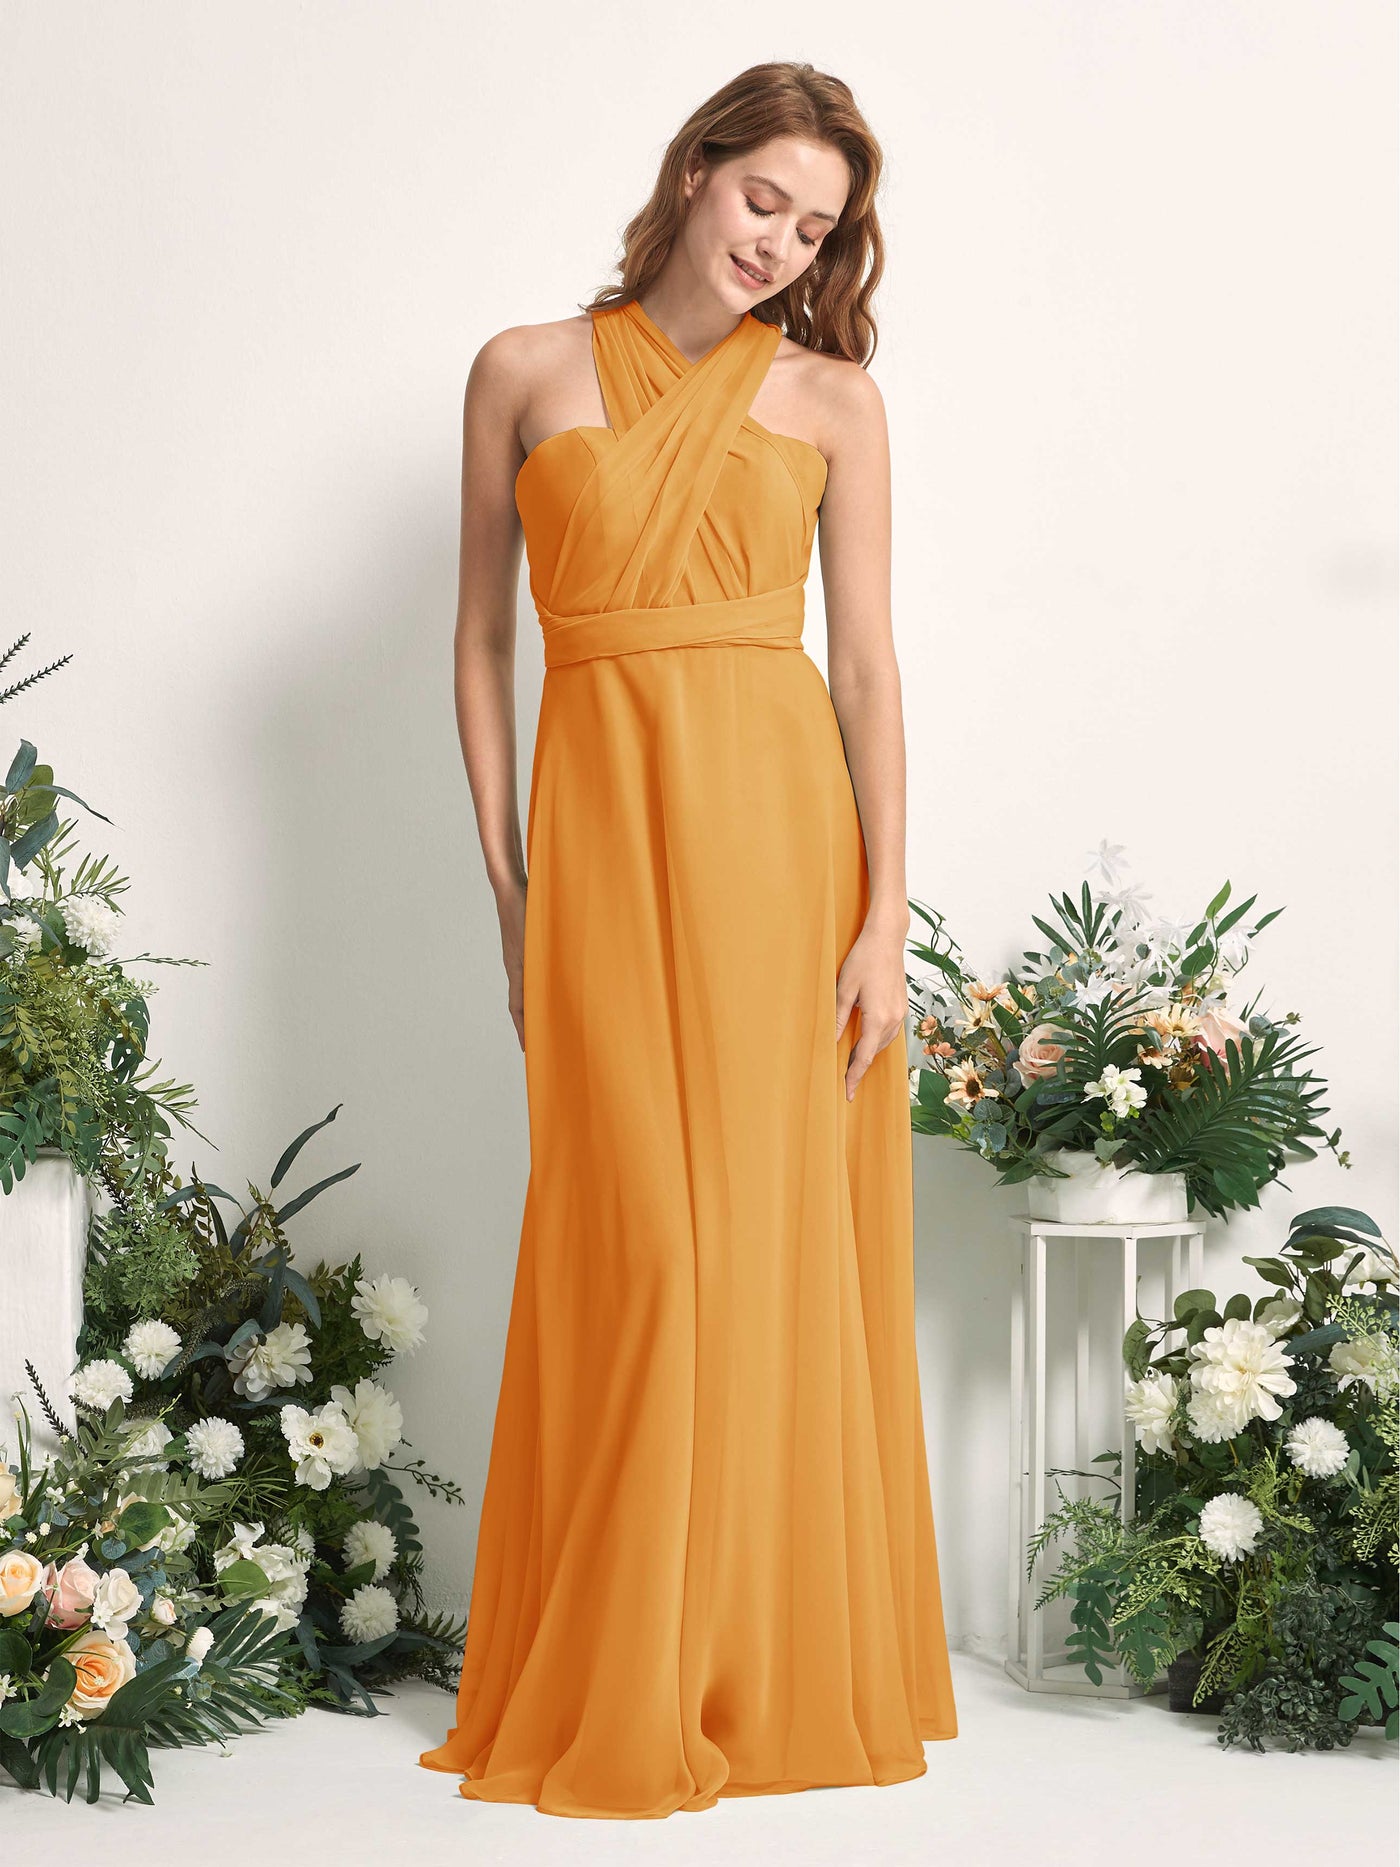 Mango Bridesmaid Dresses Bridesmaid Dress A-line Chiffon Halter Full Length Short Sleeves Wedding Party Dress (81226302)#color_mango